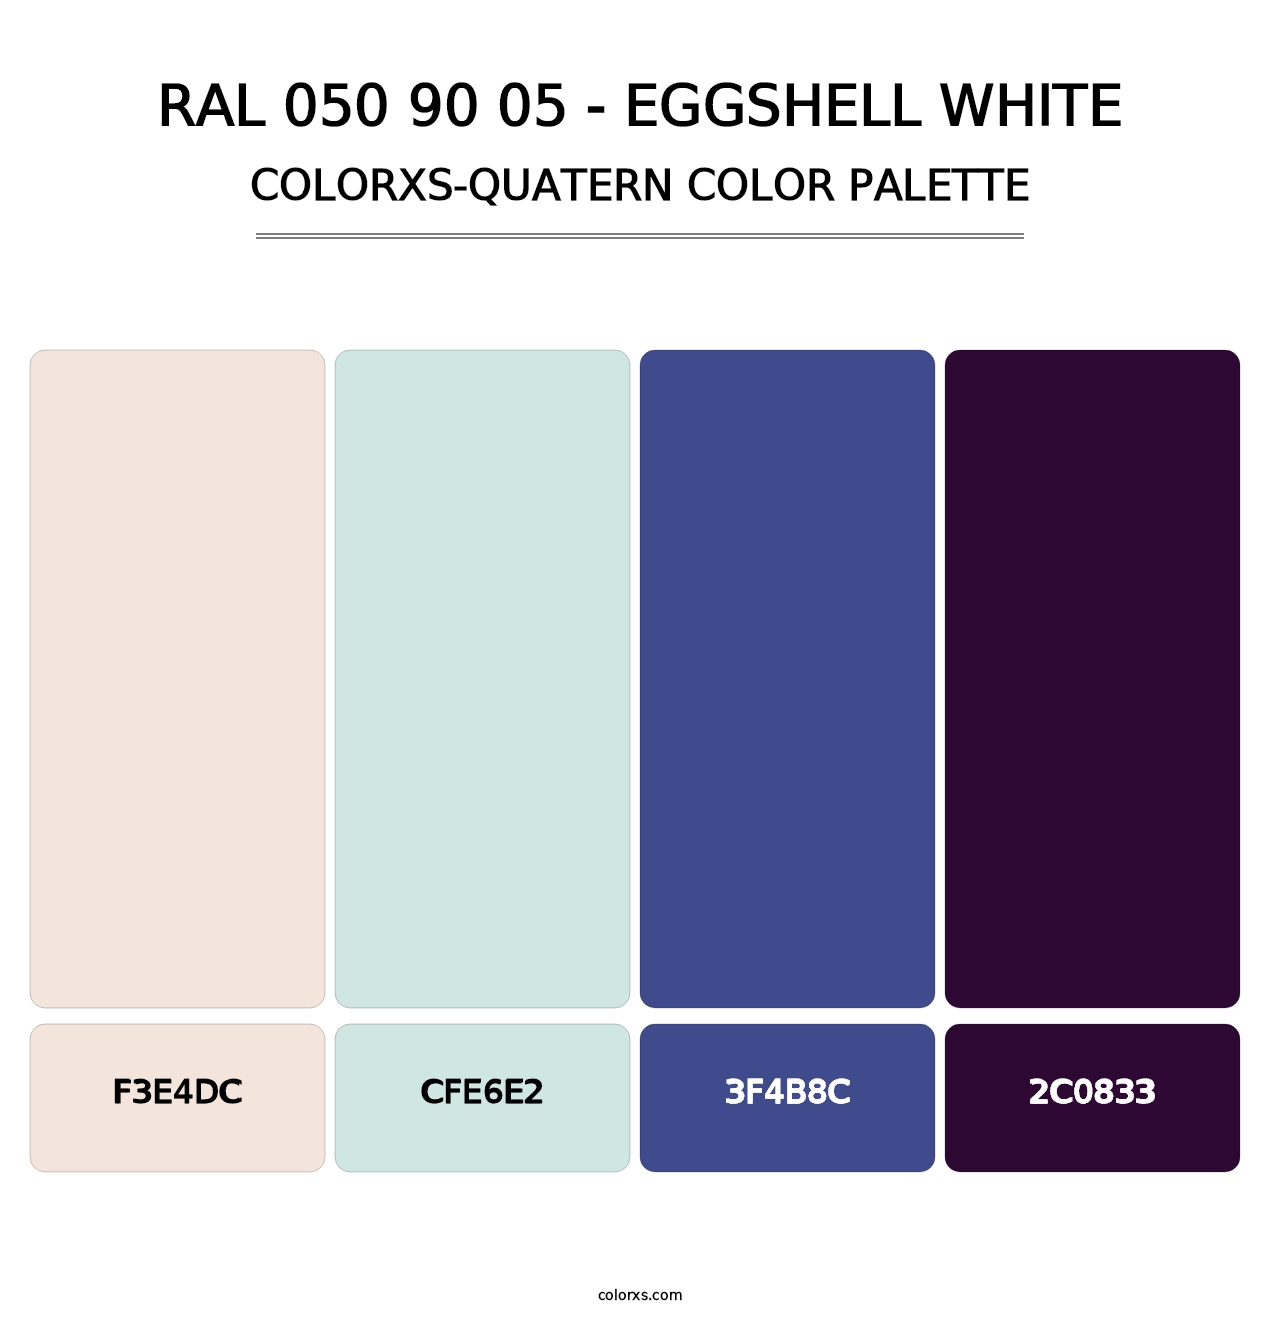 RAL 050 90 05 - Eggshell White - Colorxs Quatern Palette